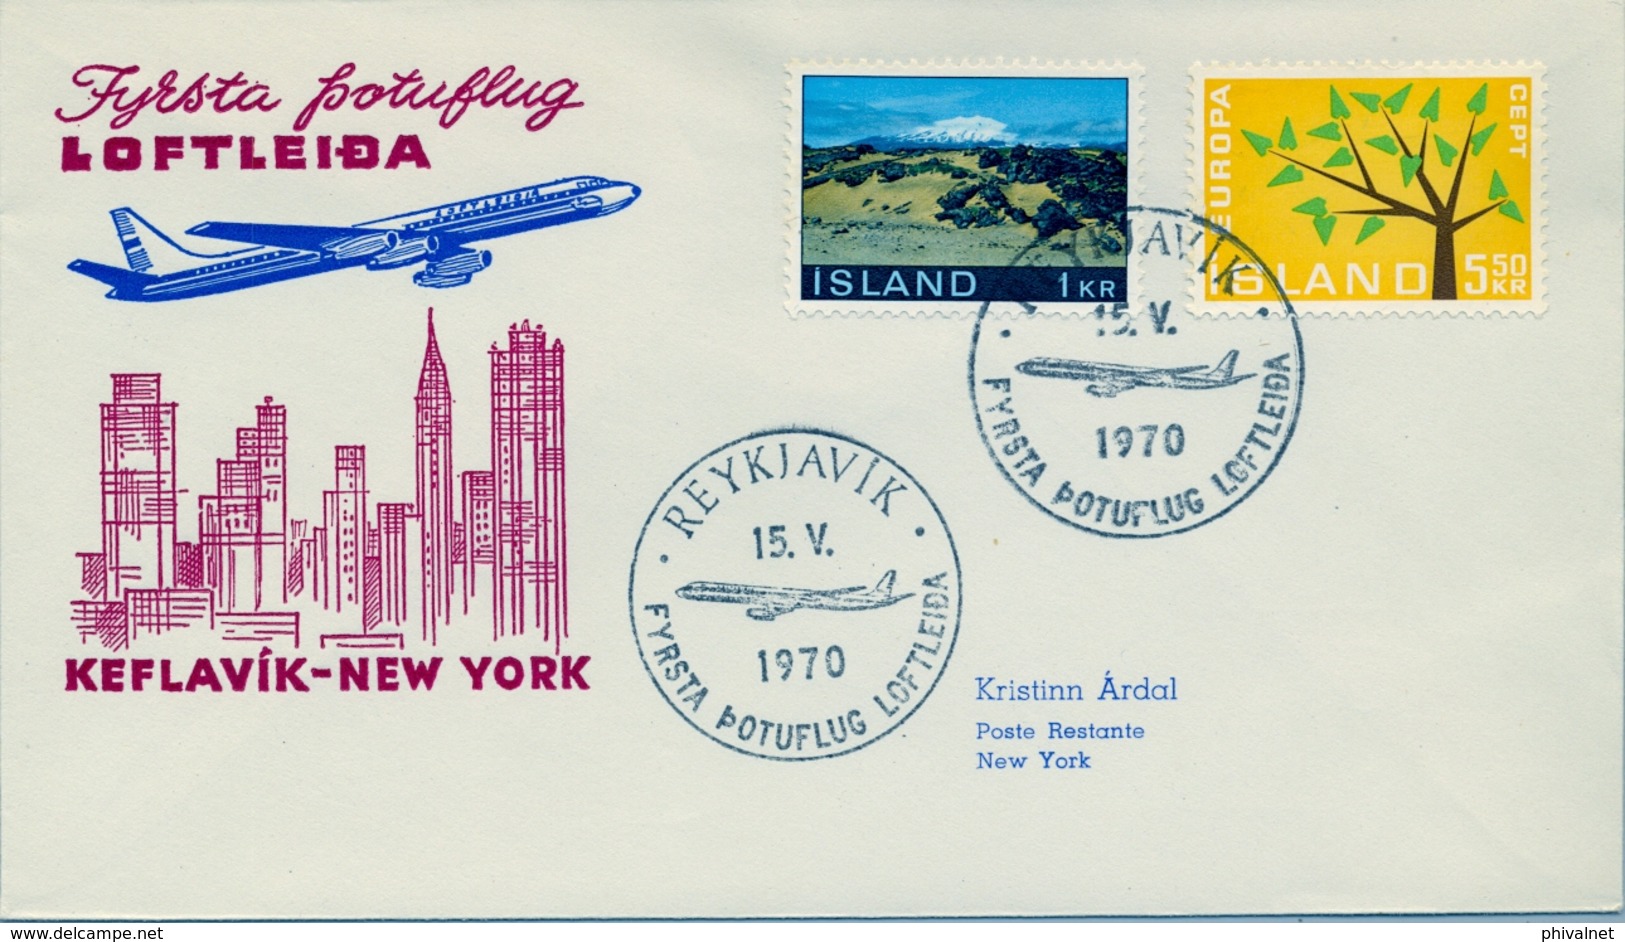 1970 , ISLANDIA , PRIMER VUELO LOFTLEIDA , REYKJAVIK - NEW YORK , KEFLAVIK AIRPORT - Lettres & Documents